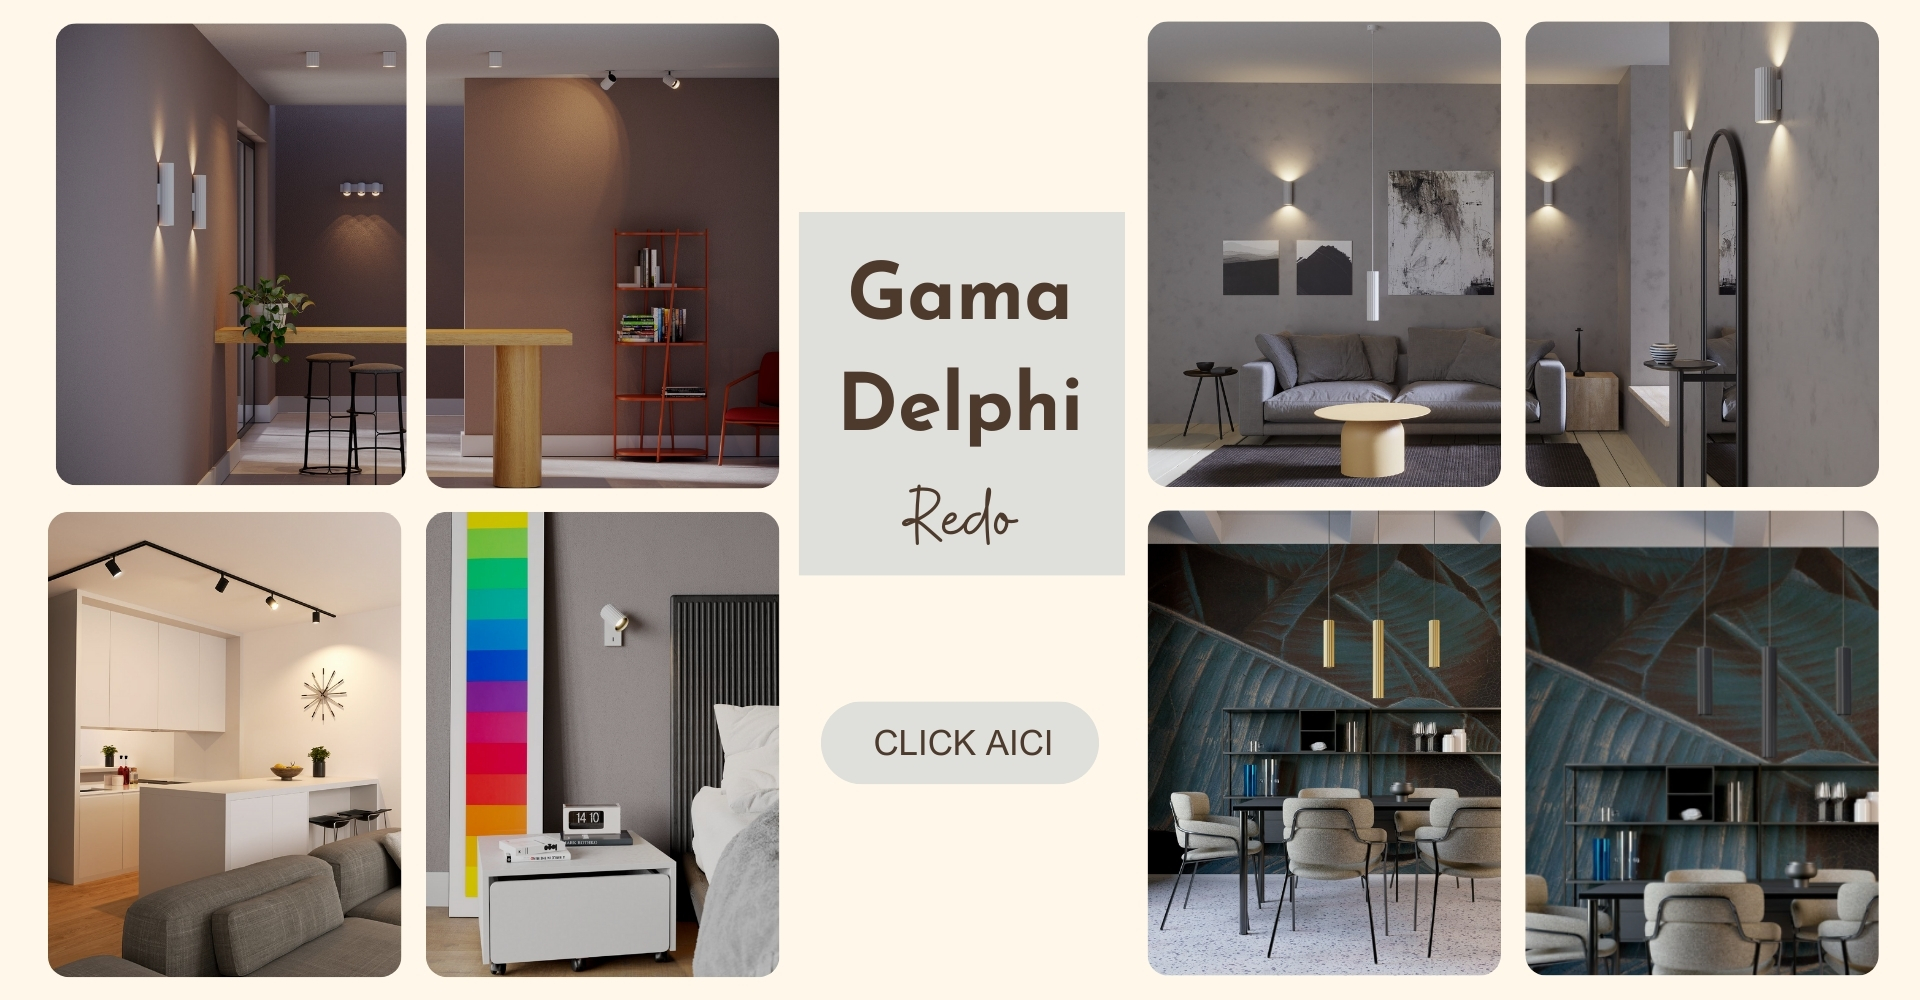 Gama Delphi